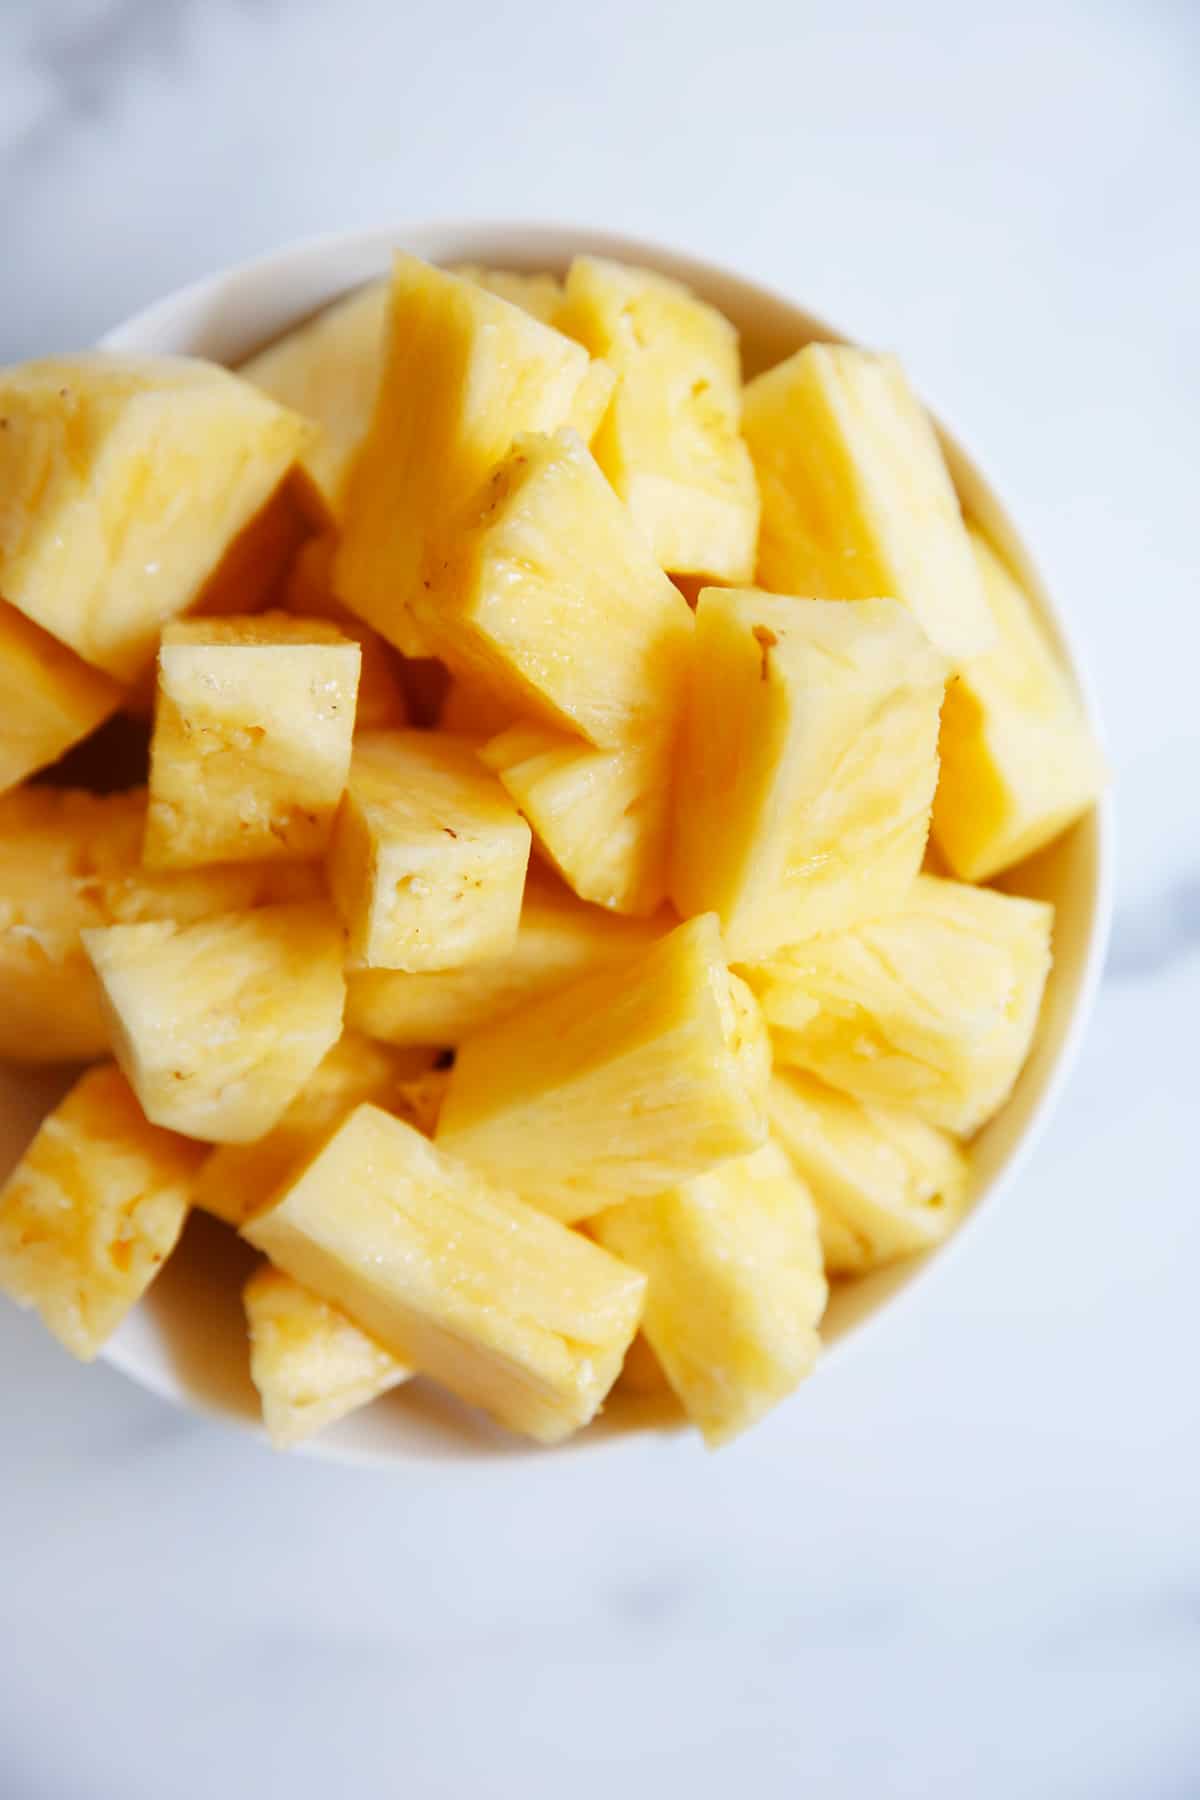 Diced pineapple